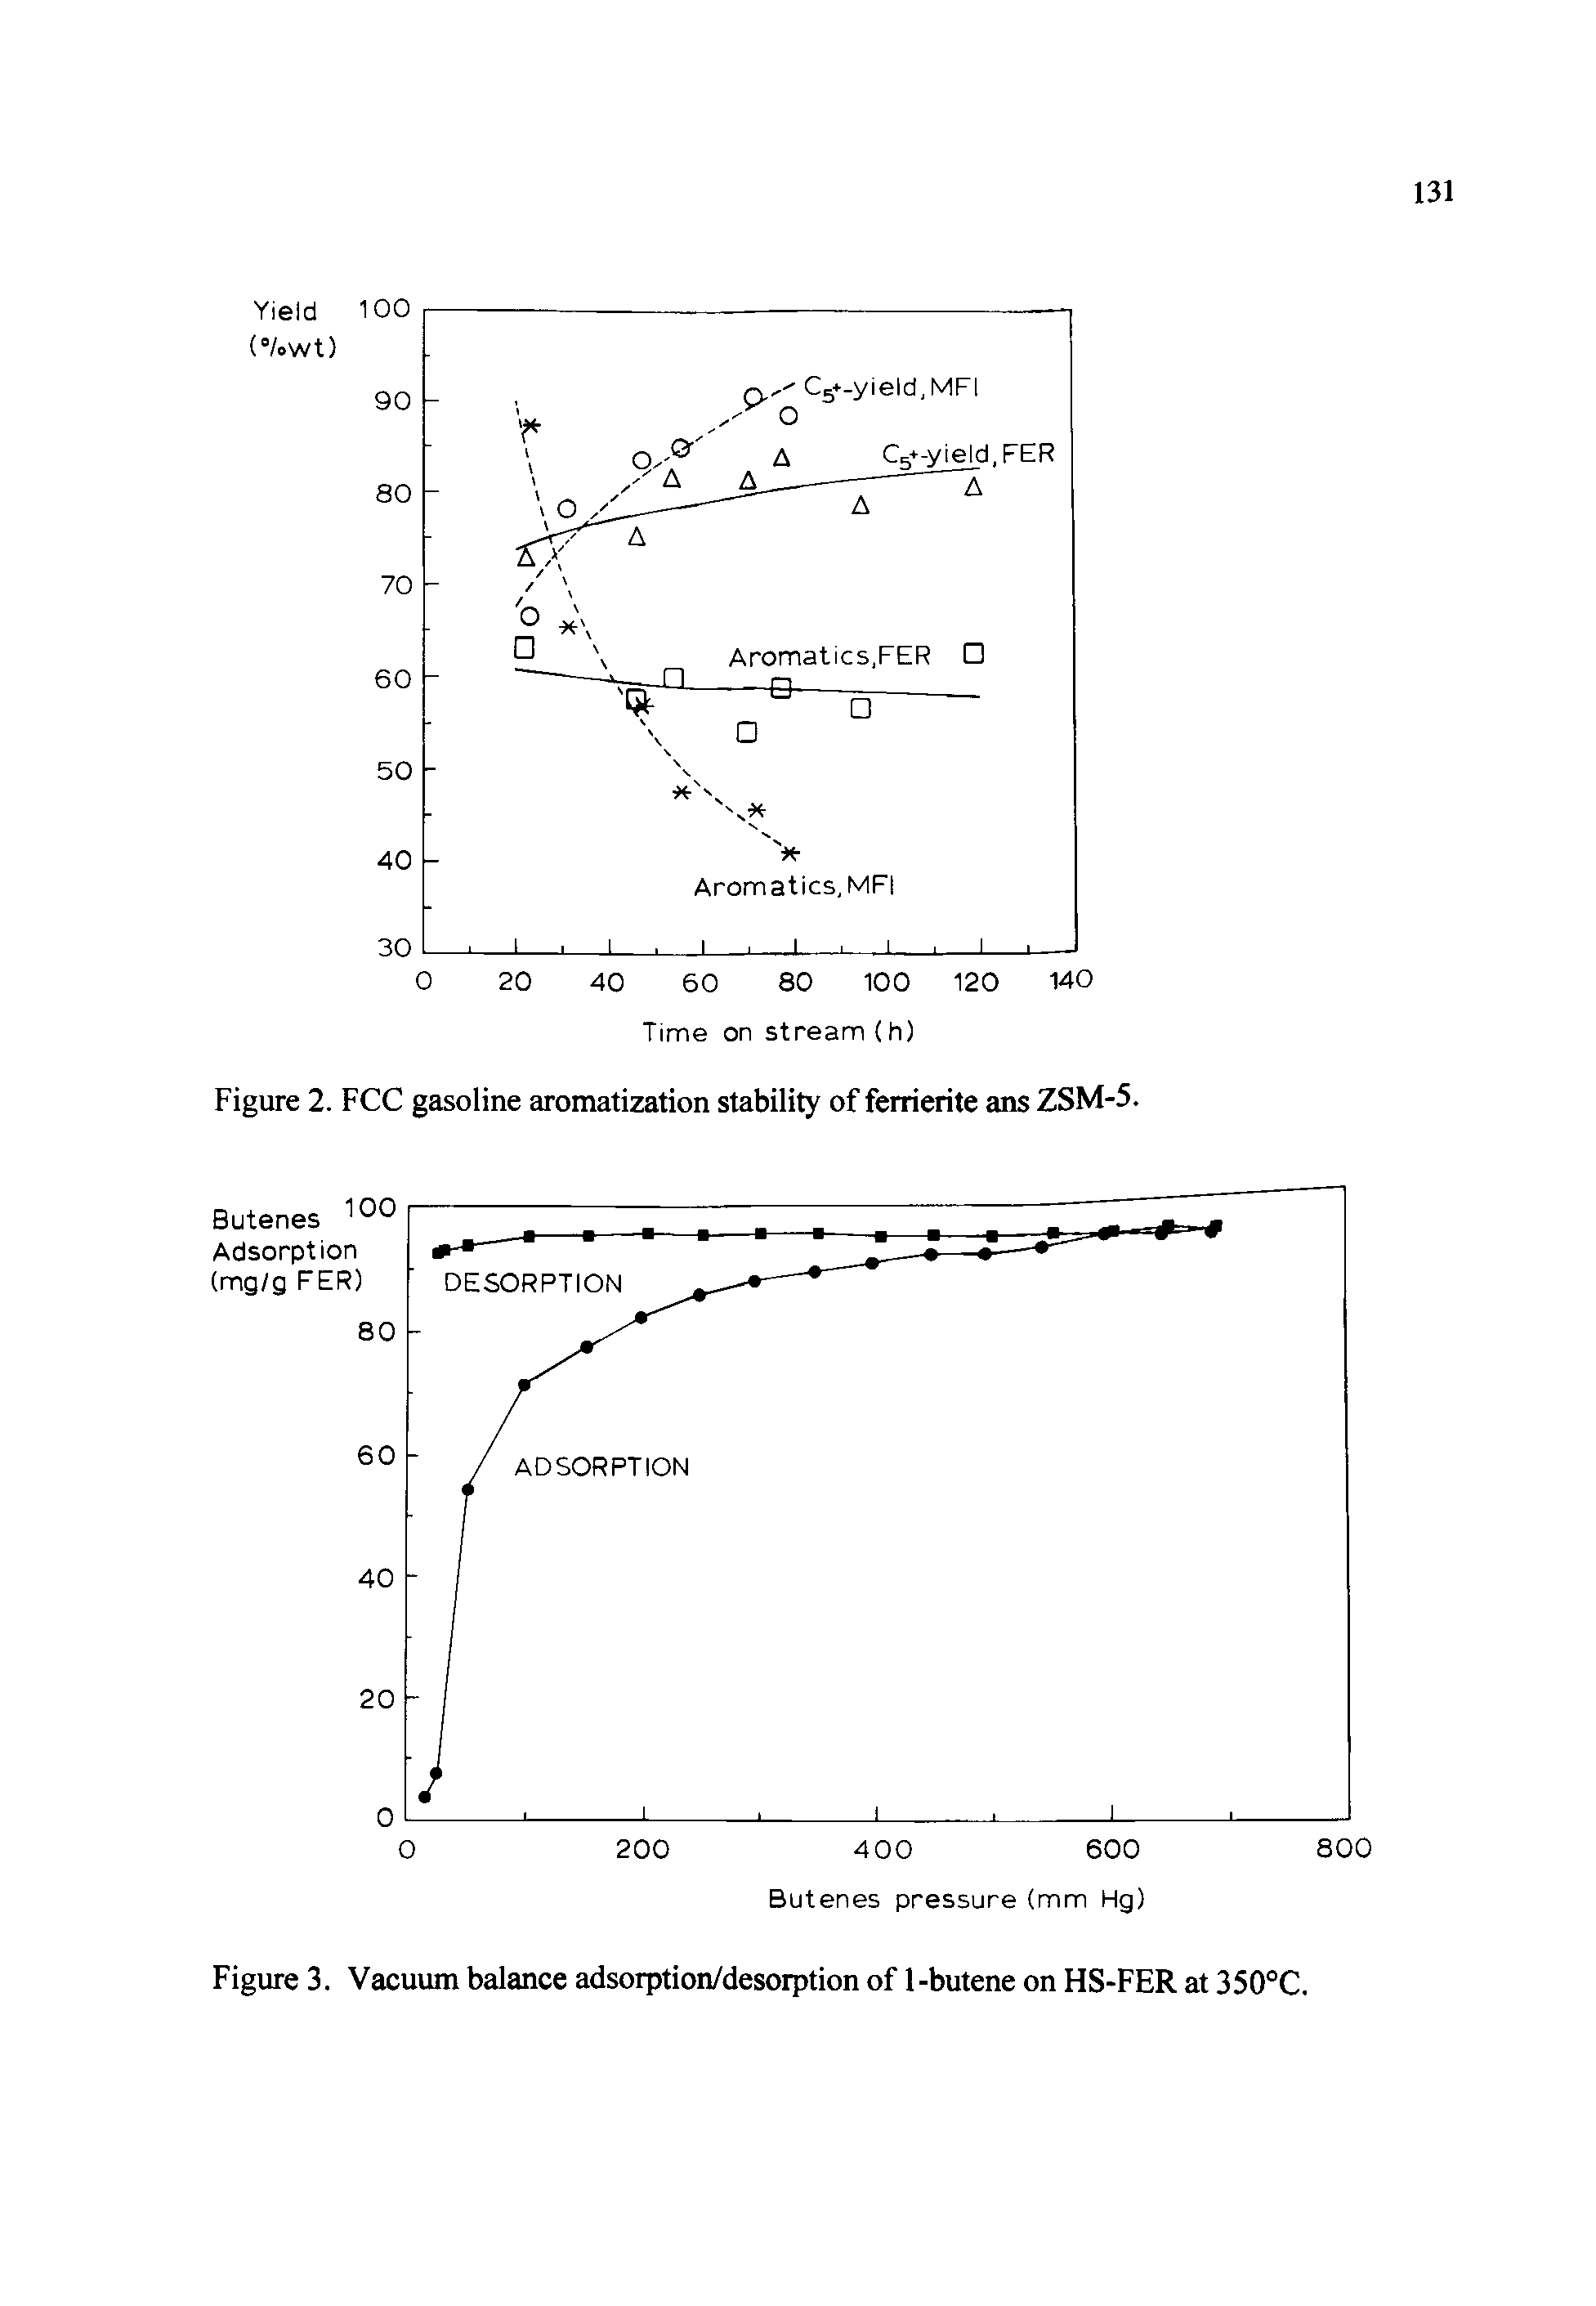 Figure 3. Vacuum balance adsorption/desorption of 1-butene on HS-FER at 350°C.